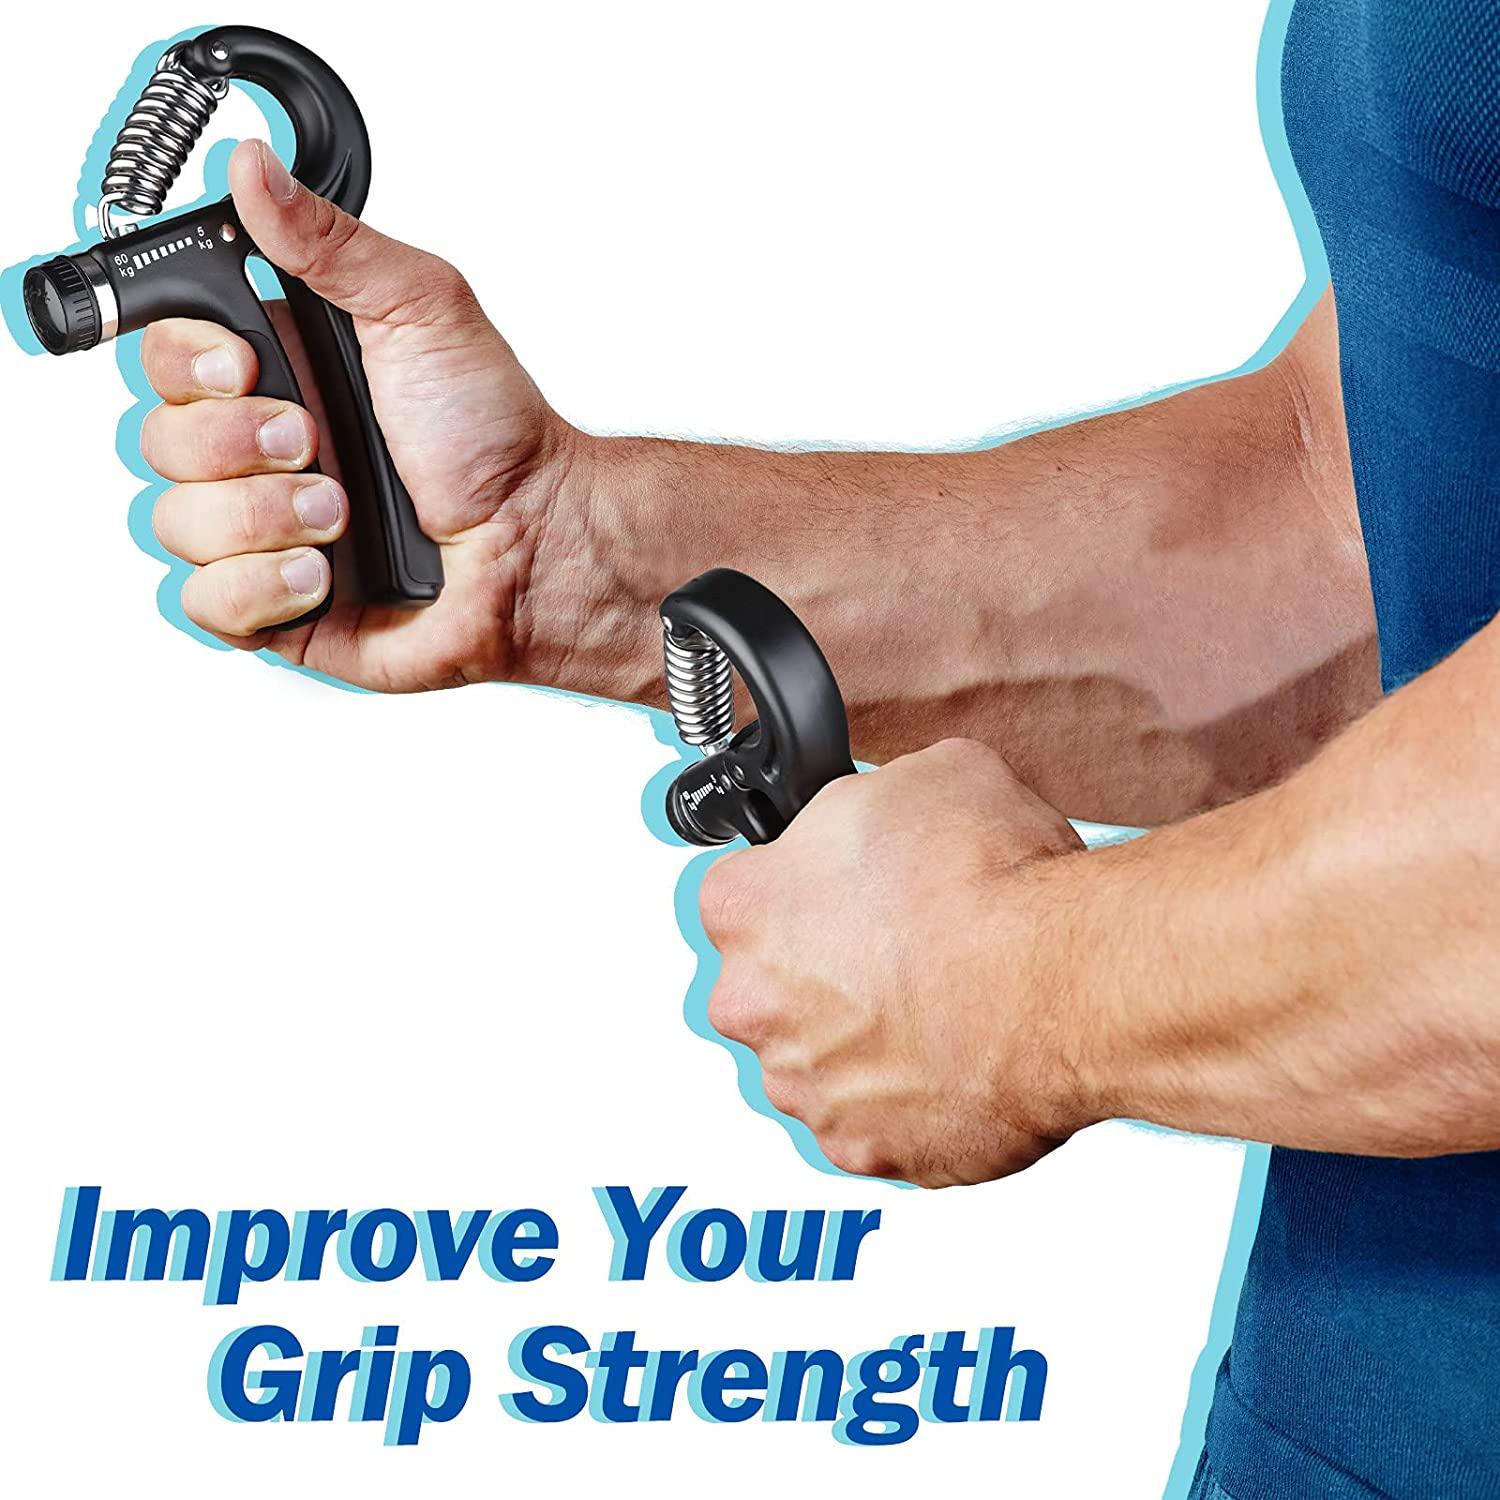 Hand Grip, Musculation Main, Grip Strengthener, Hand Grip Strengthener, Hand  Grip Musculation, Grip Musculation Main, Main